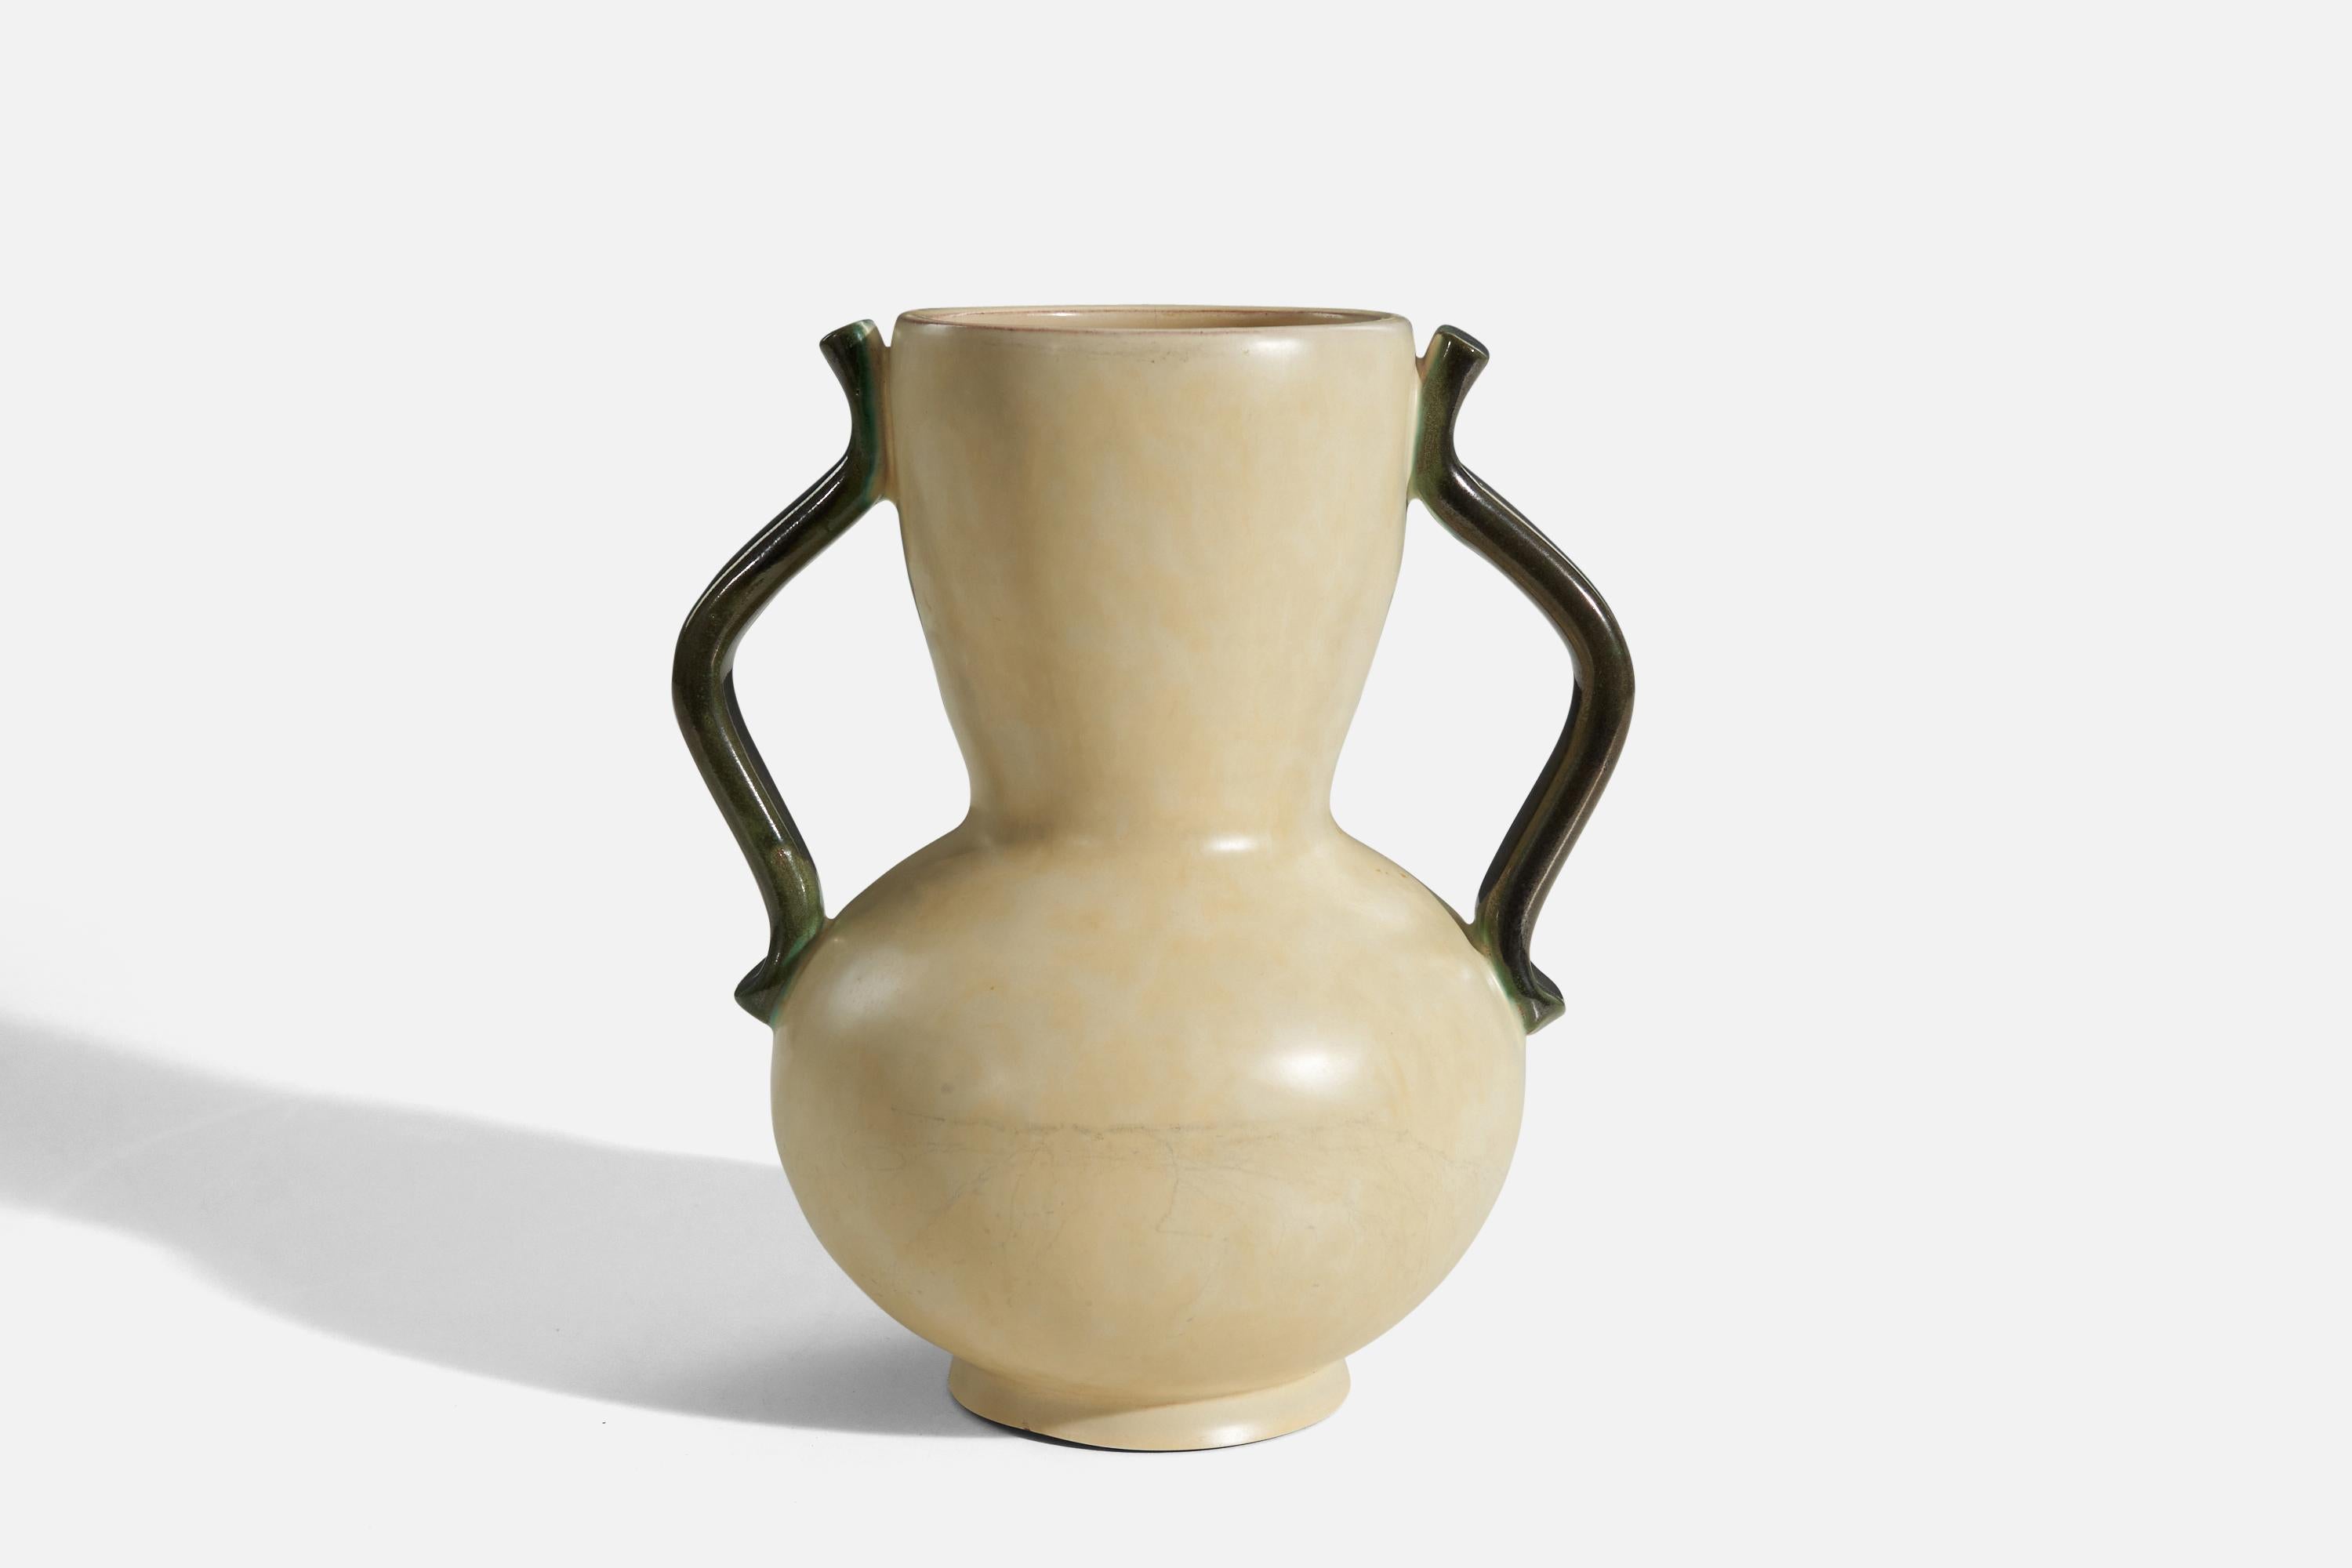 A beige and green-glazed earthenware vase designed by Anna-Lisa Thomson, for Upsala-Ekeby, Sweden, 1940s. 

